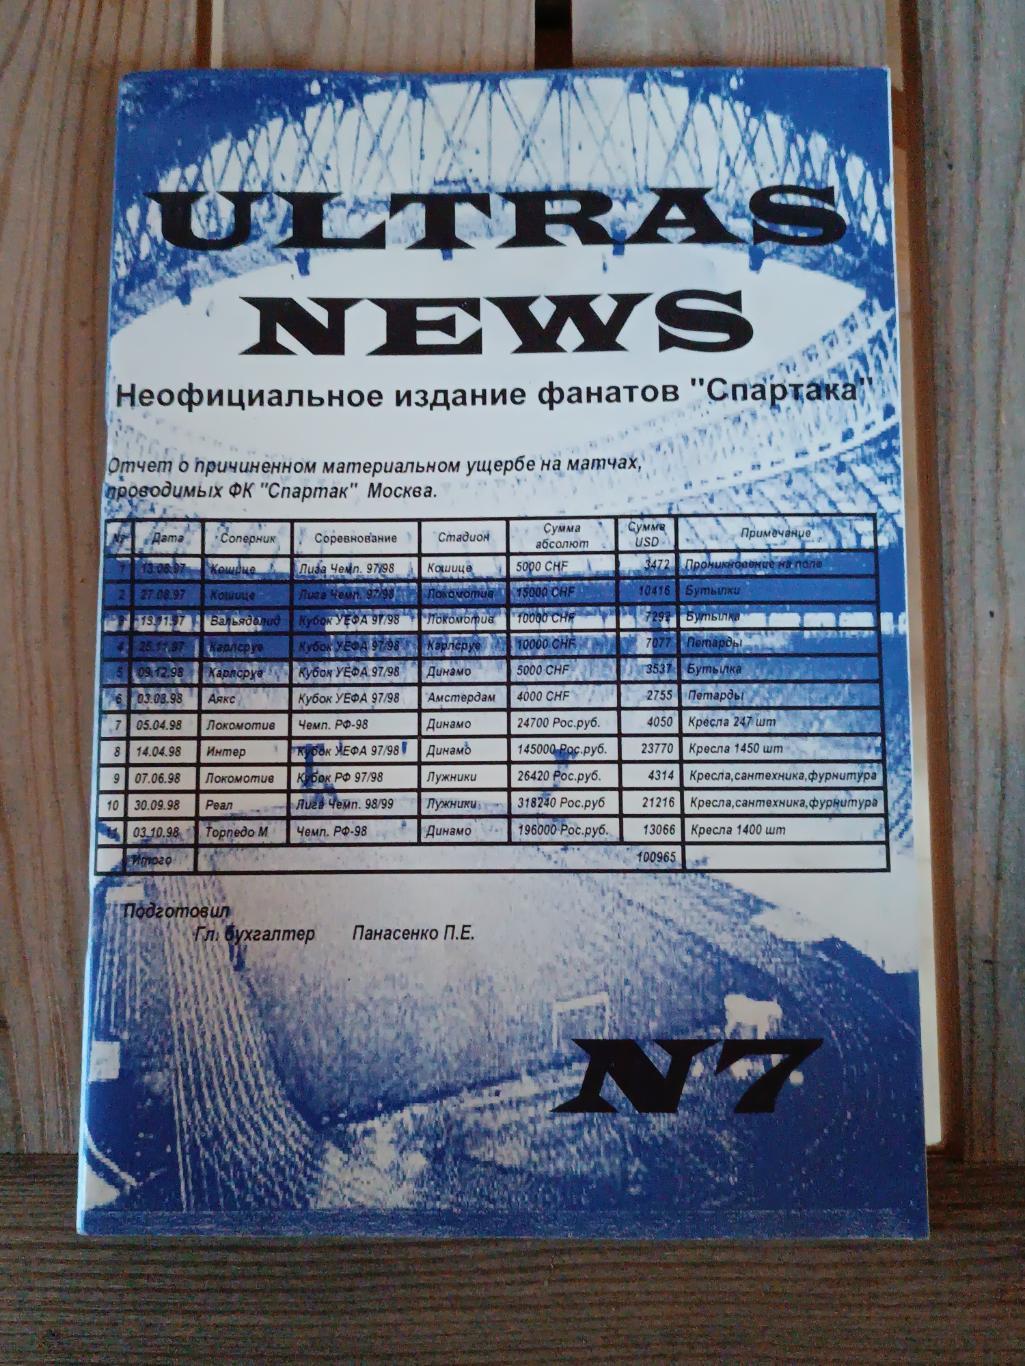 Фанзин ultras news № 7